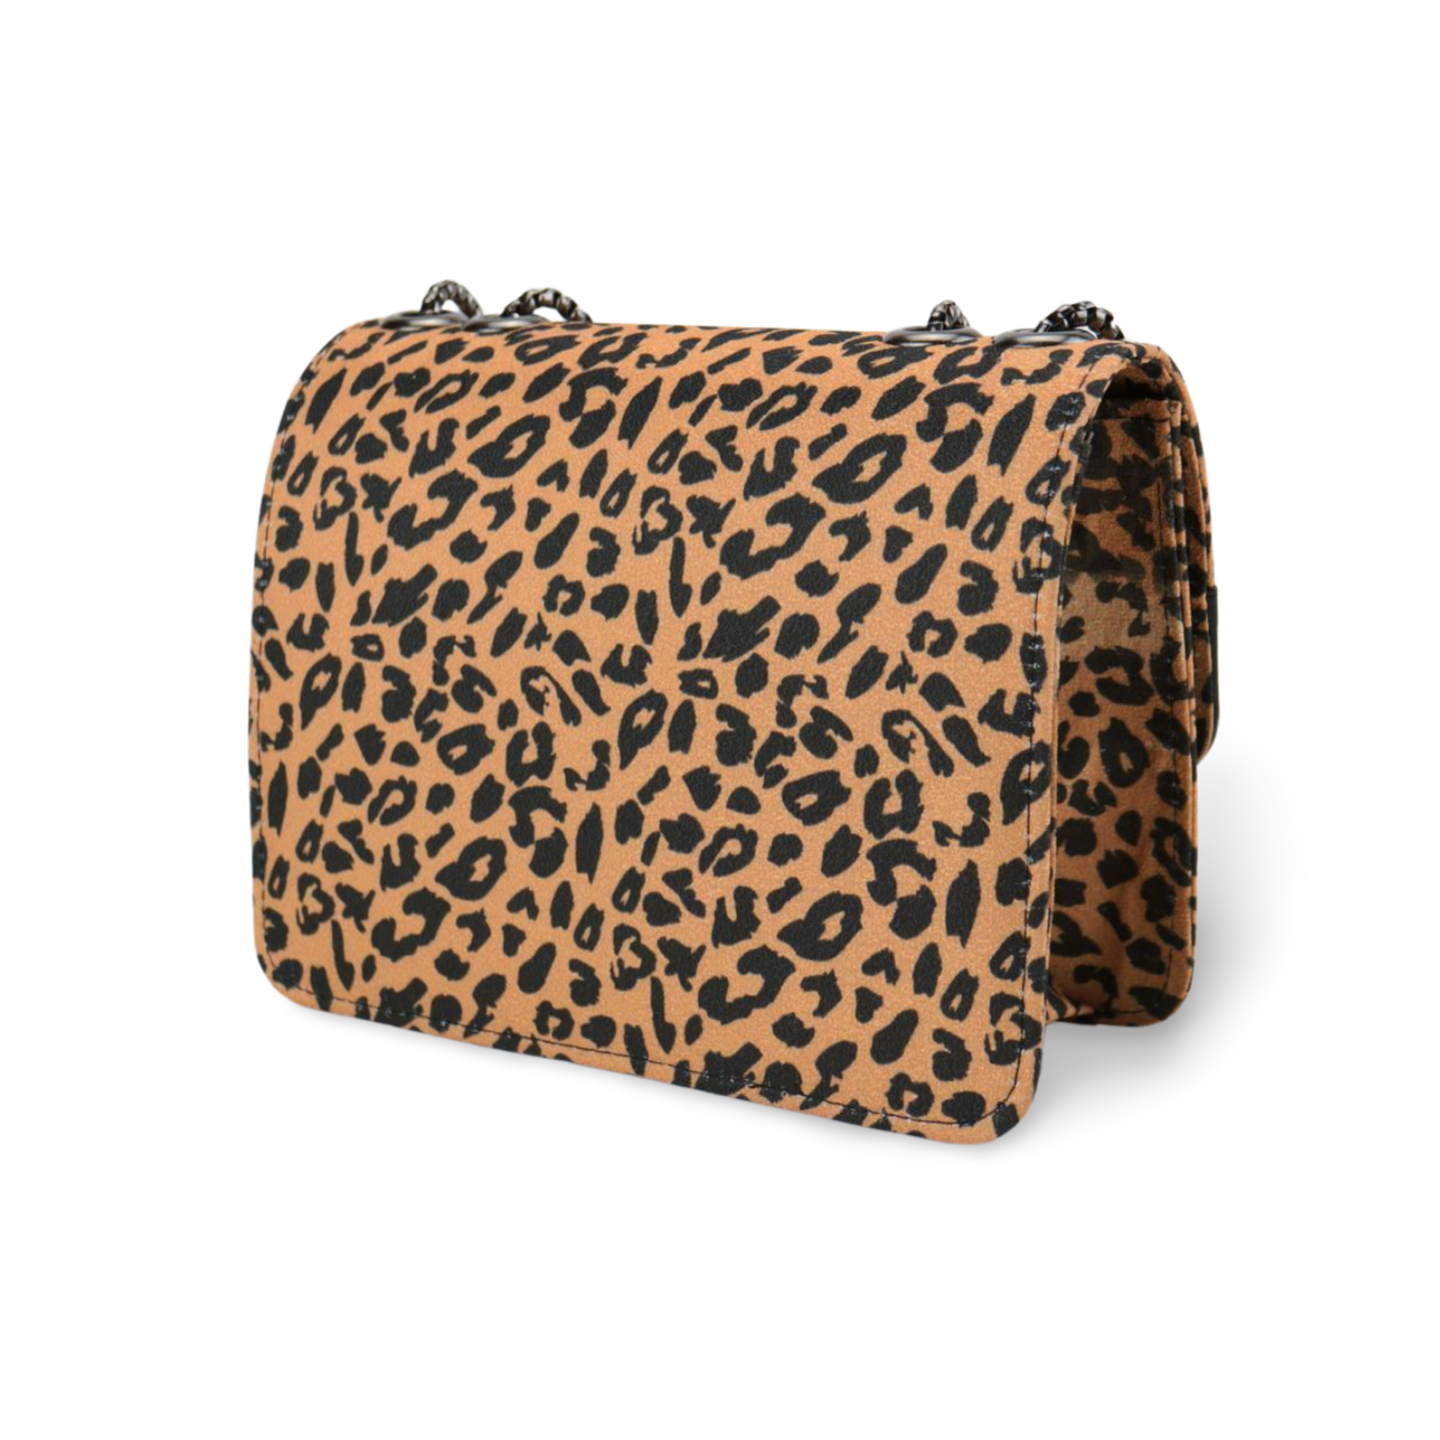 Stylish Cheetah Print Shoulder Bag with Chain Strap